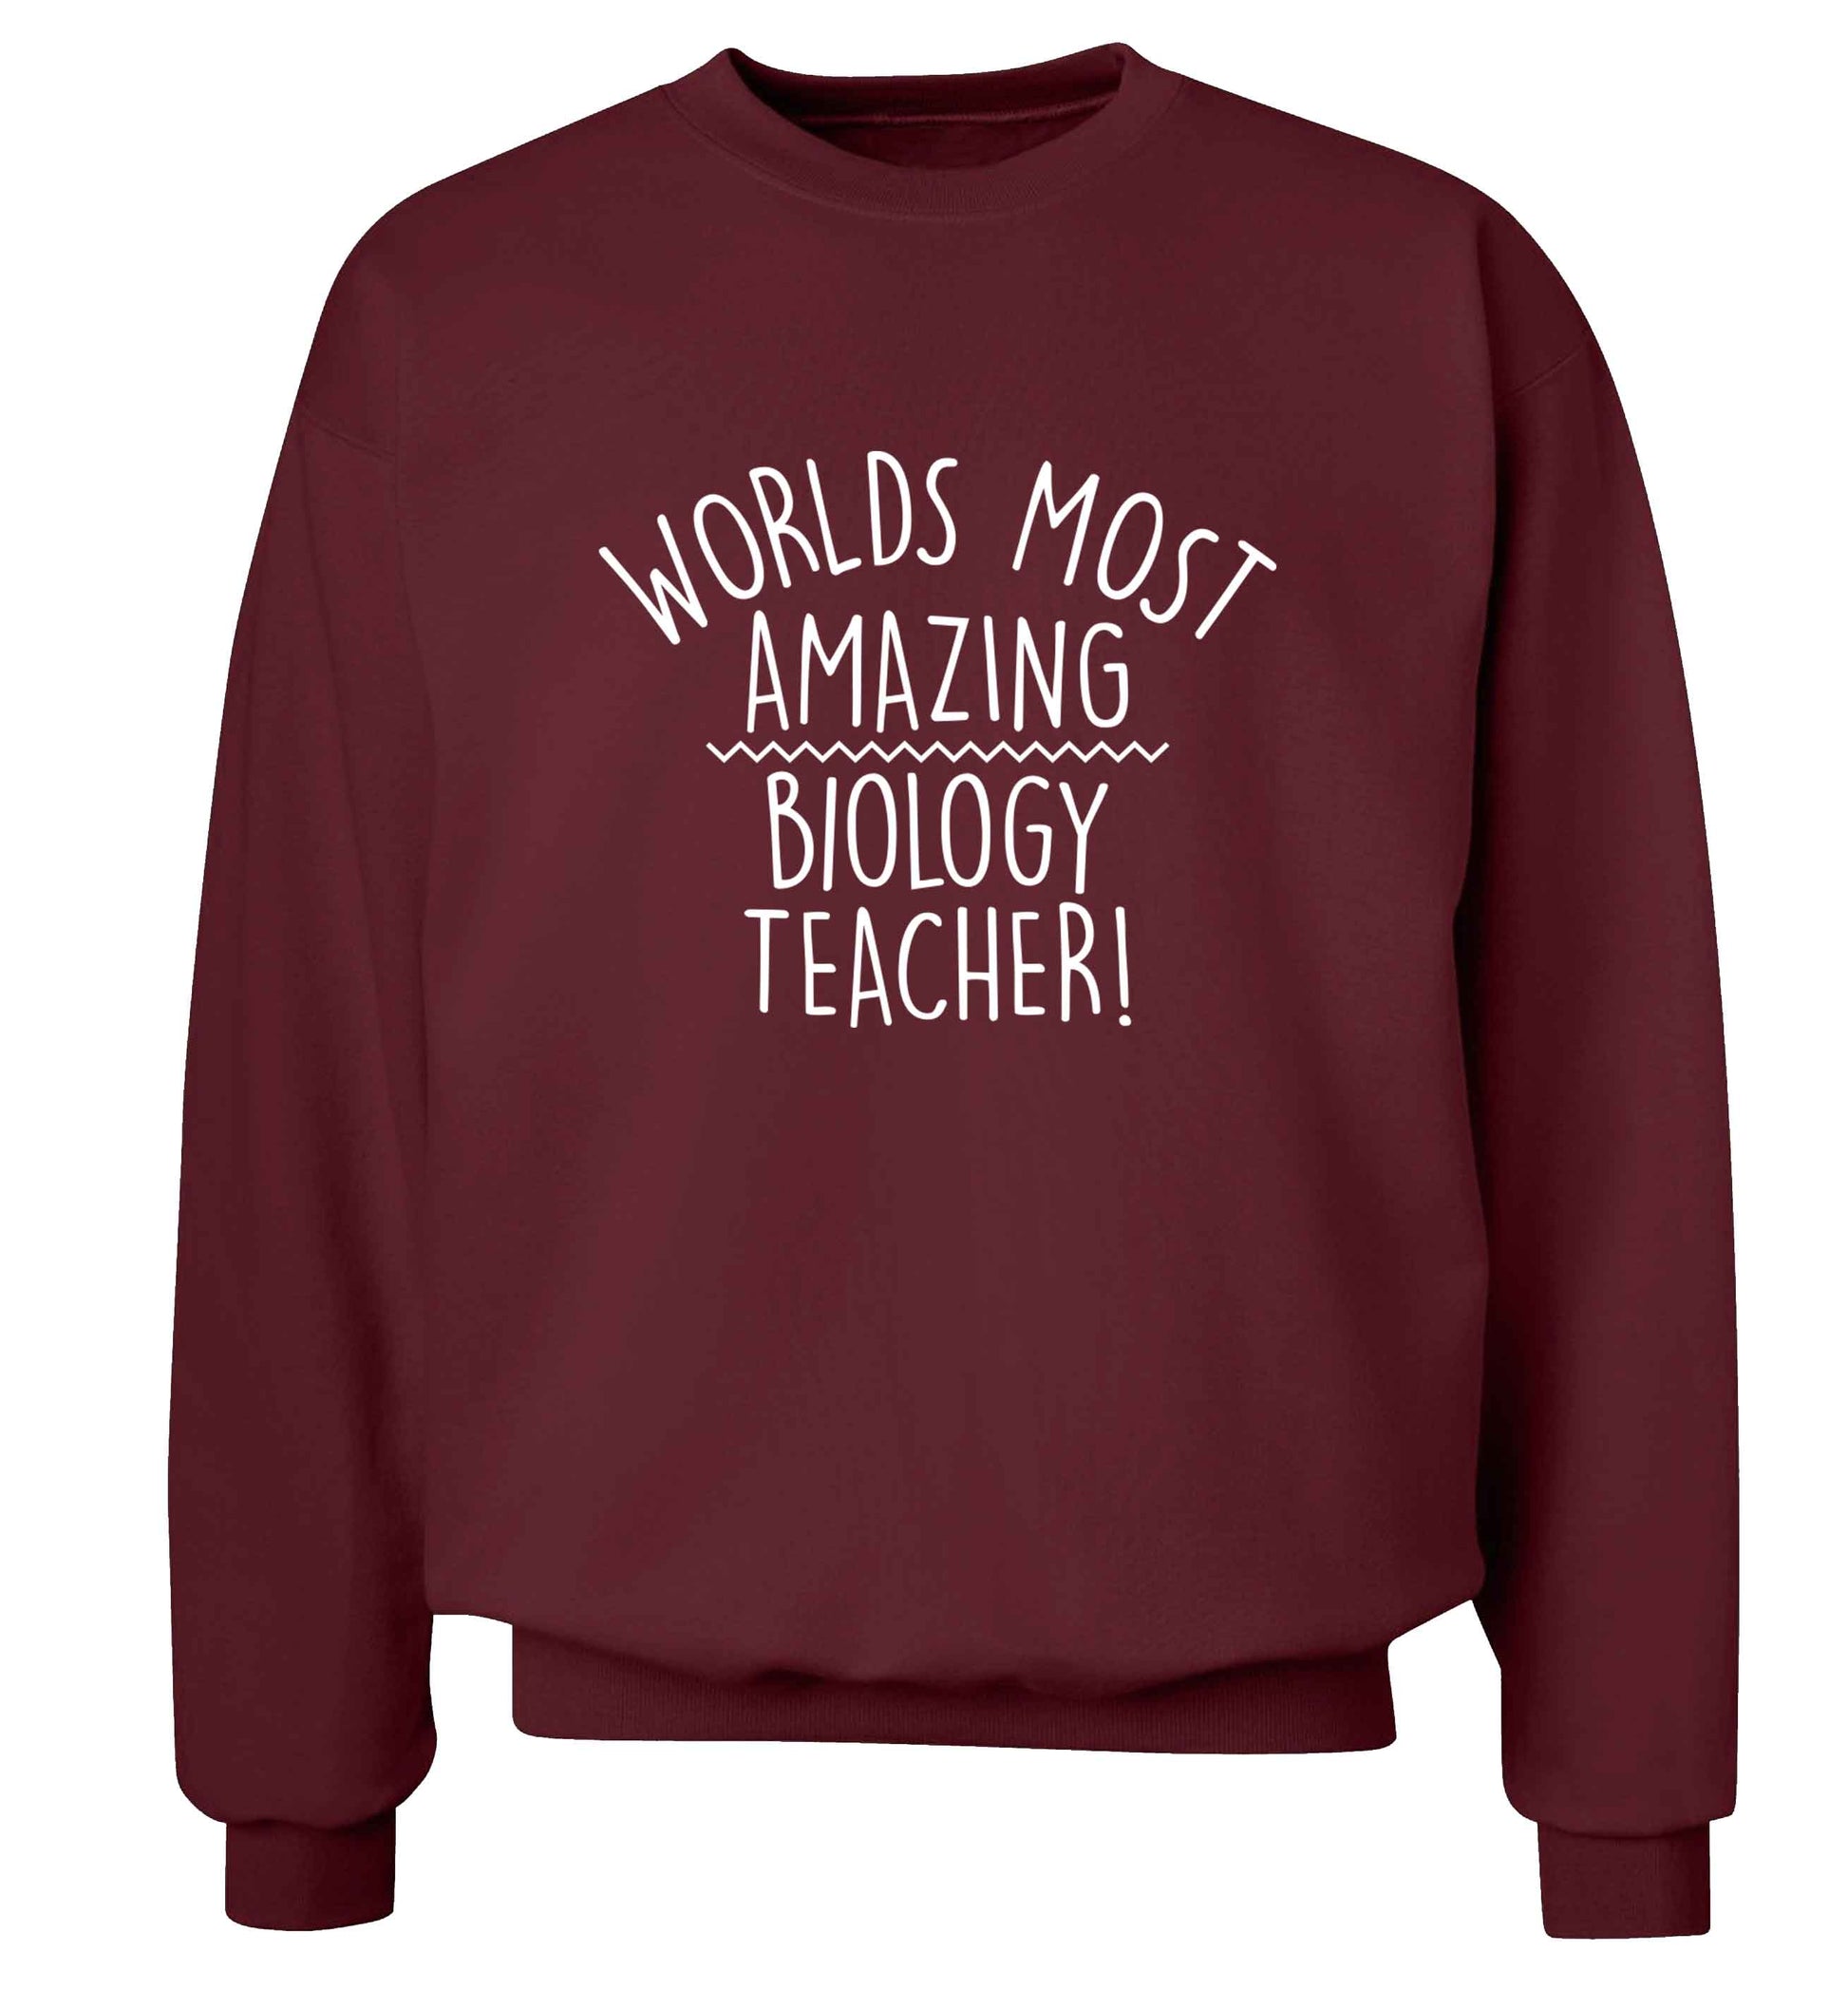 Worlds most amazing biology teacher adult's unisex maroon sweater 2XL